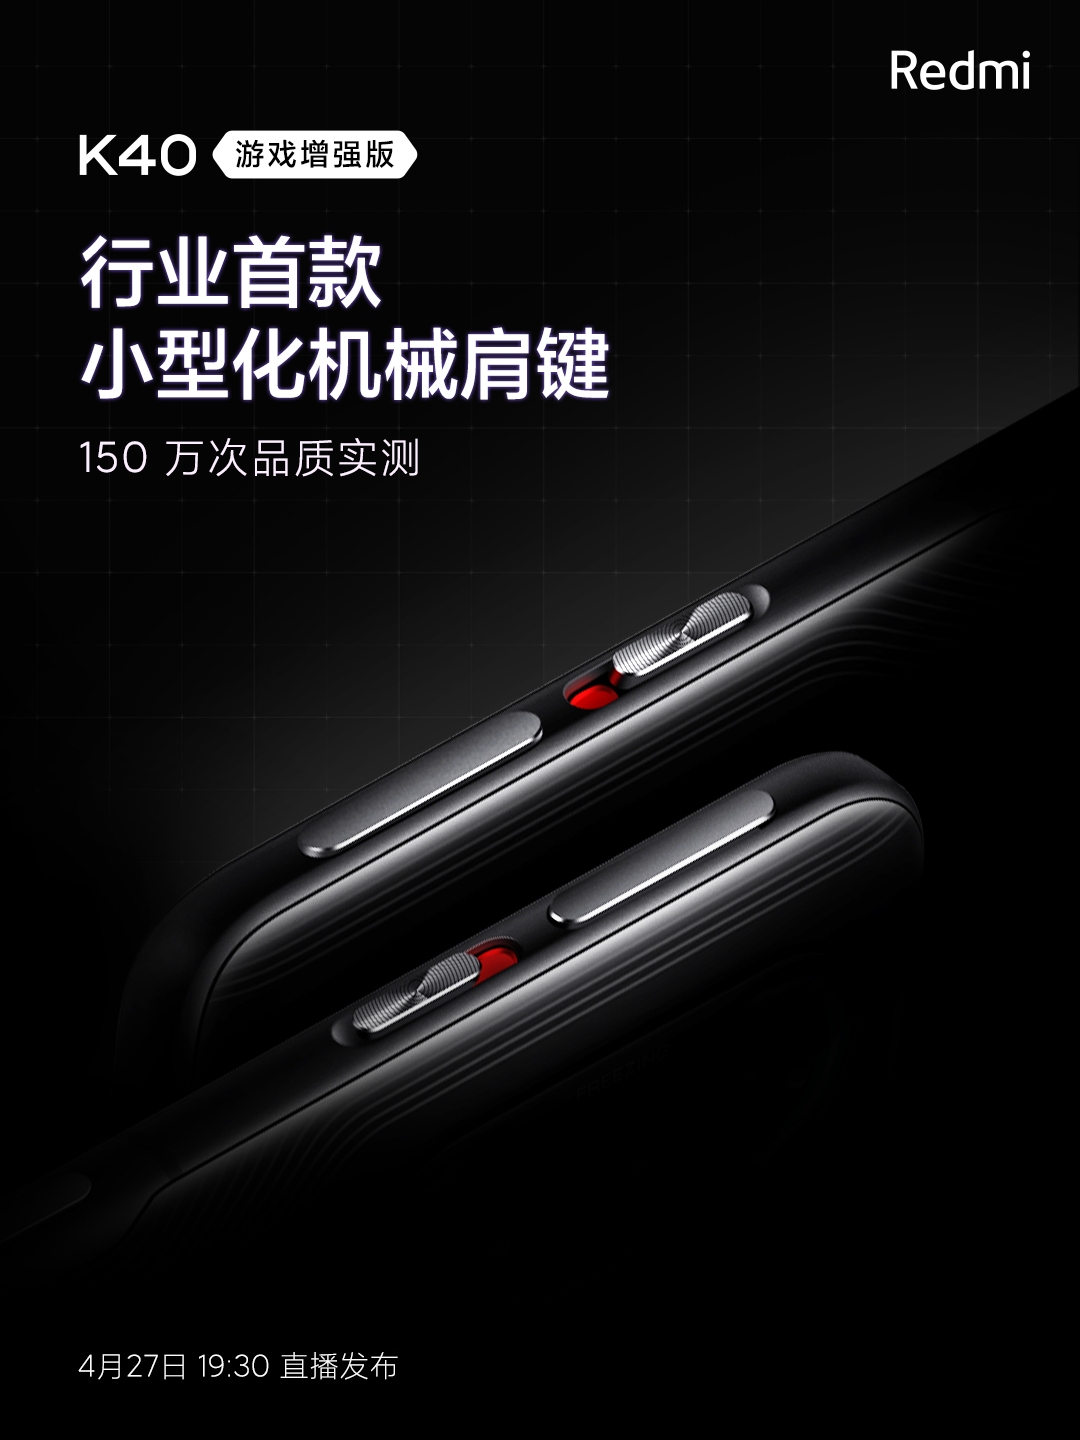 Redmi gaming enhanced edition. Xiaomi k40 Gaming Edition. Сяоми редми к40 гейминг эдишн. Redmi k40 game enhanced. Xiaomi Redmi k40 Gaming Edition заказать.